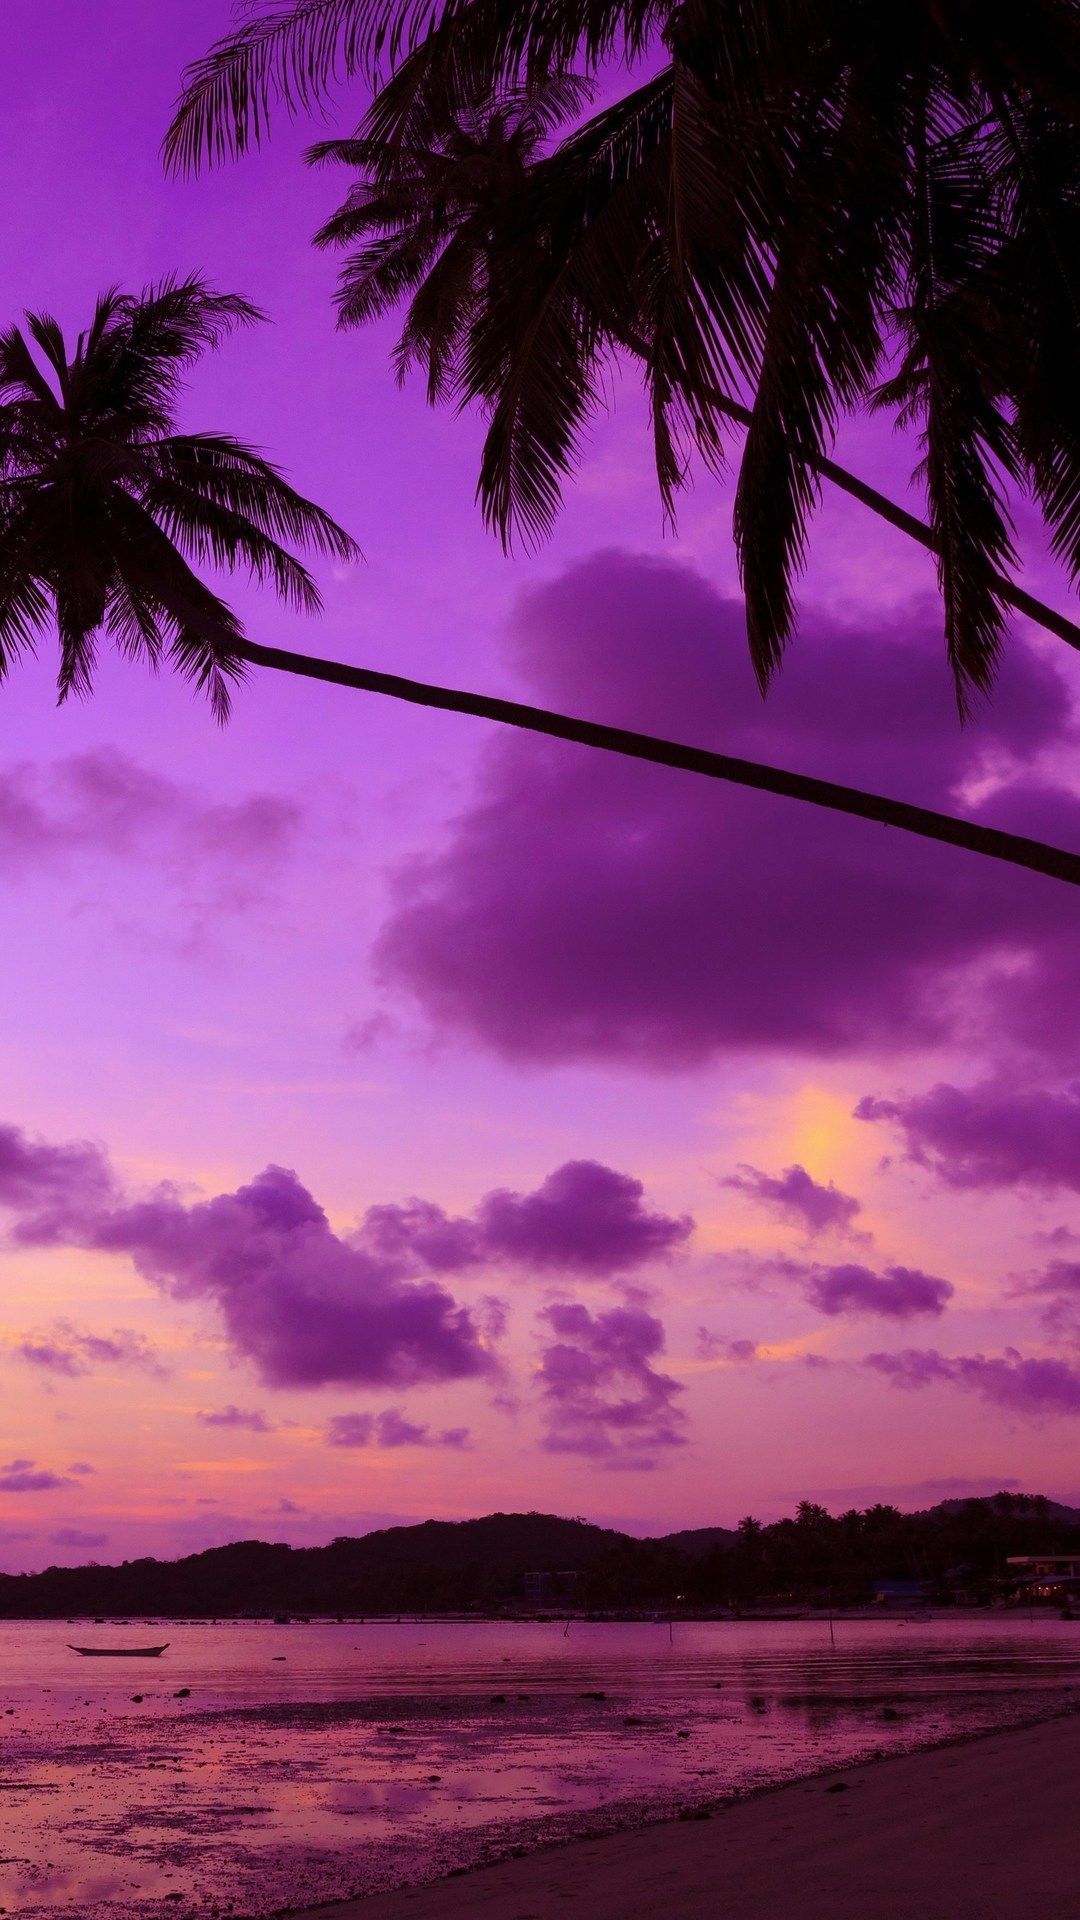 Purple Palm Tree In 1080x1920 Resolution. Palm trees wallpaper